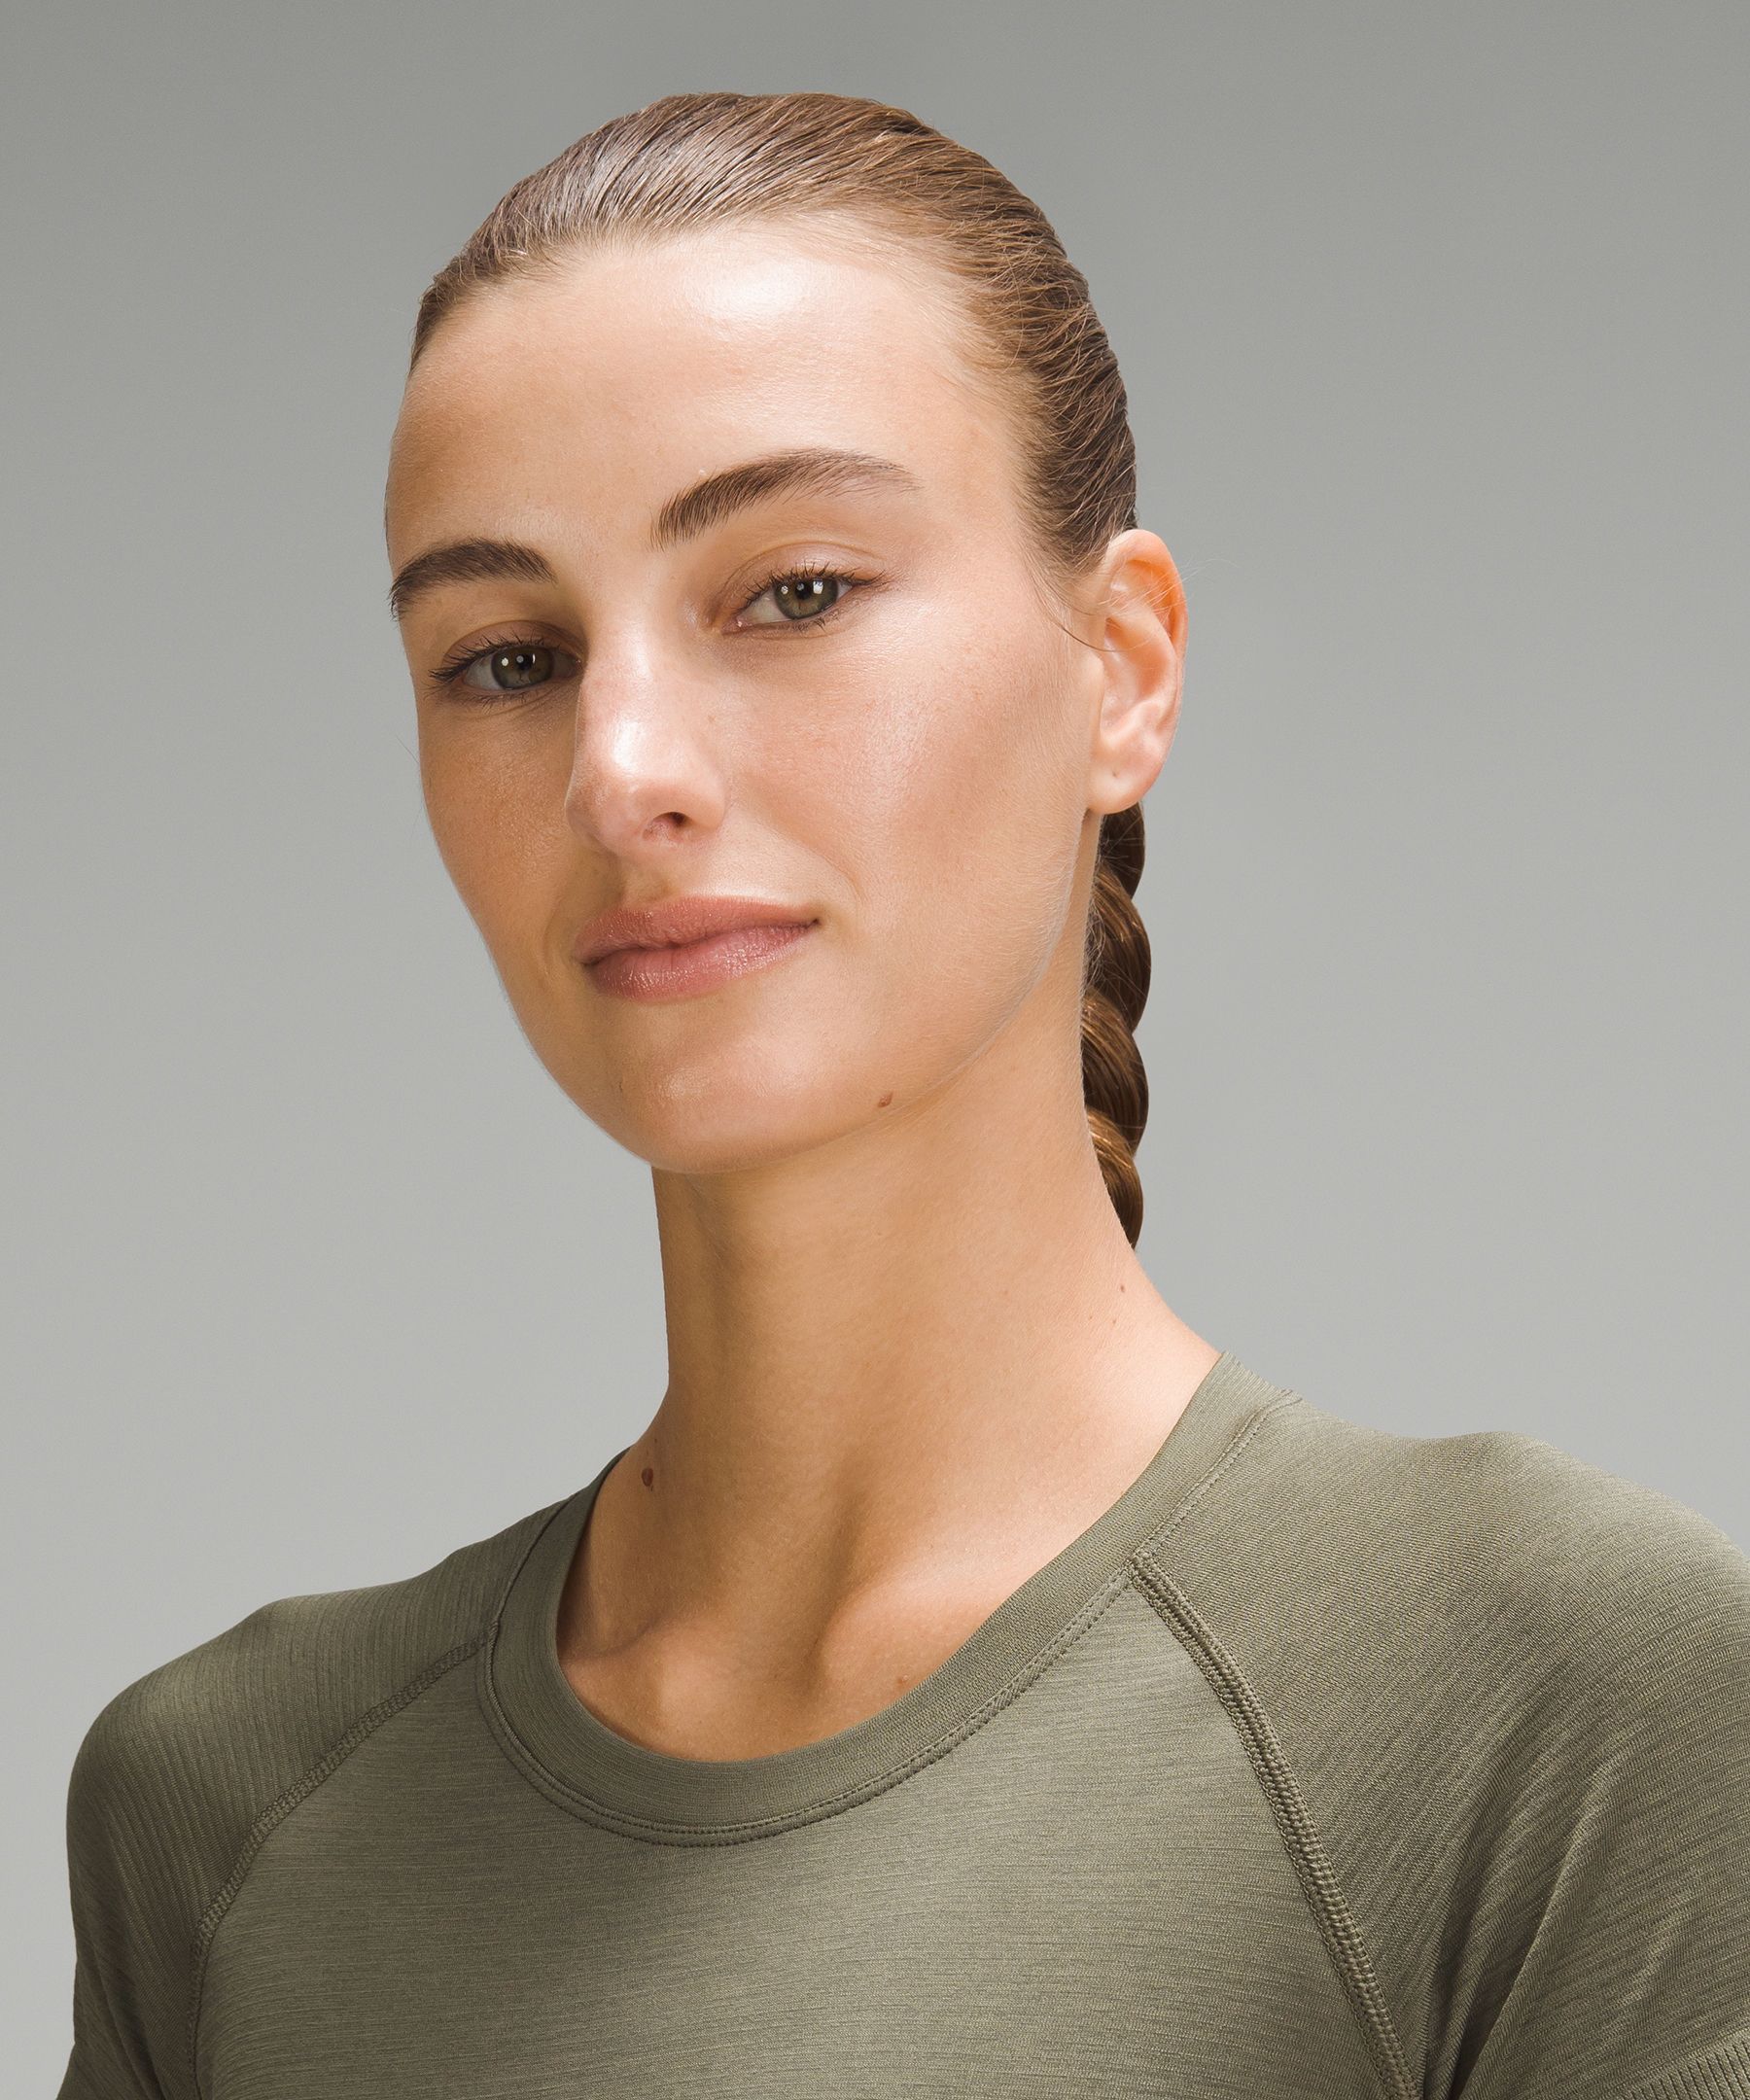 Swiftly Tech Cropped Long-Sleeve Shirt 2.0, Women's Long Sleeve Shirts, lululemon